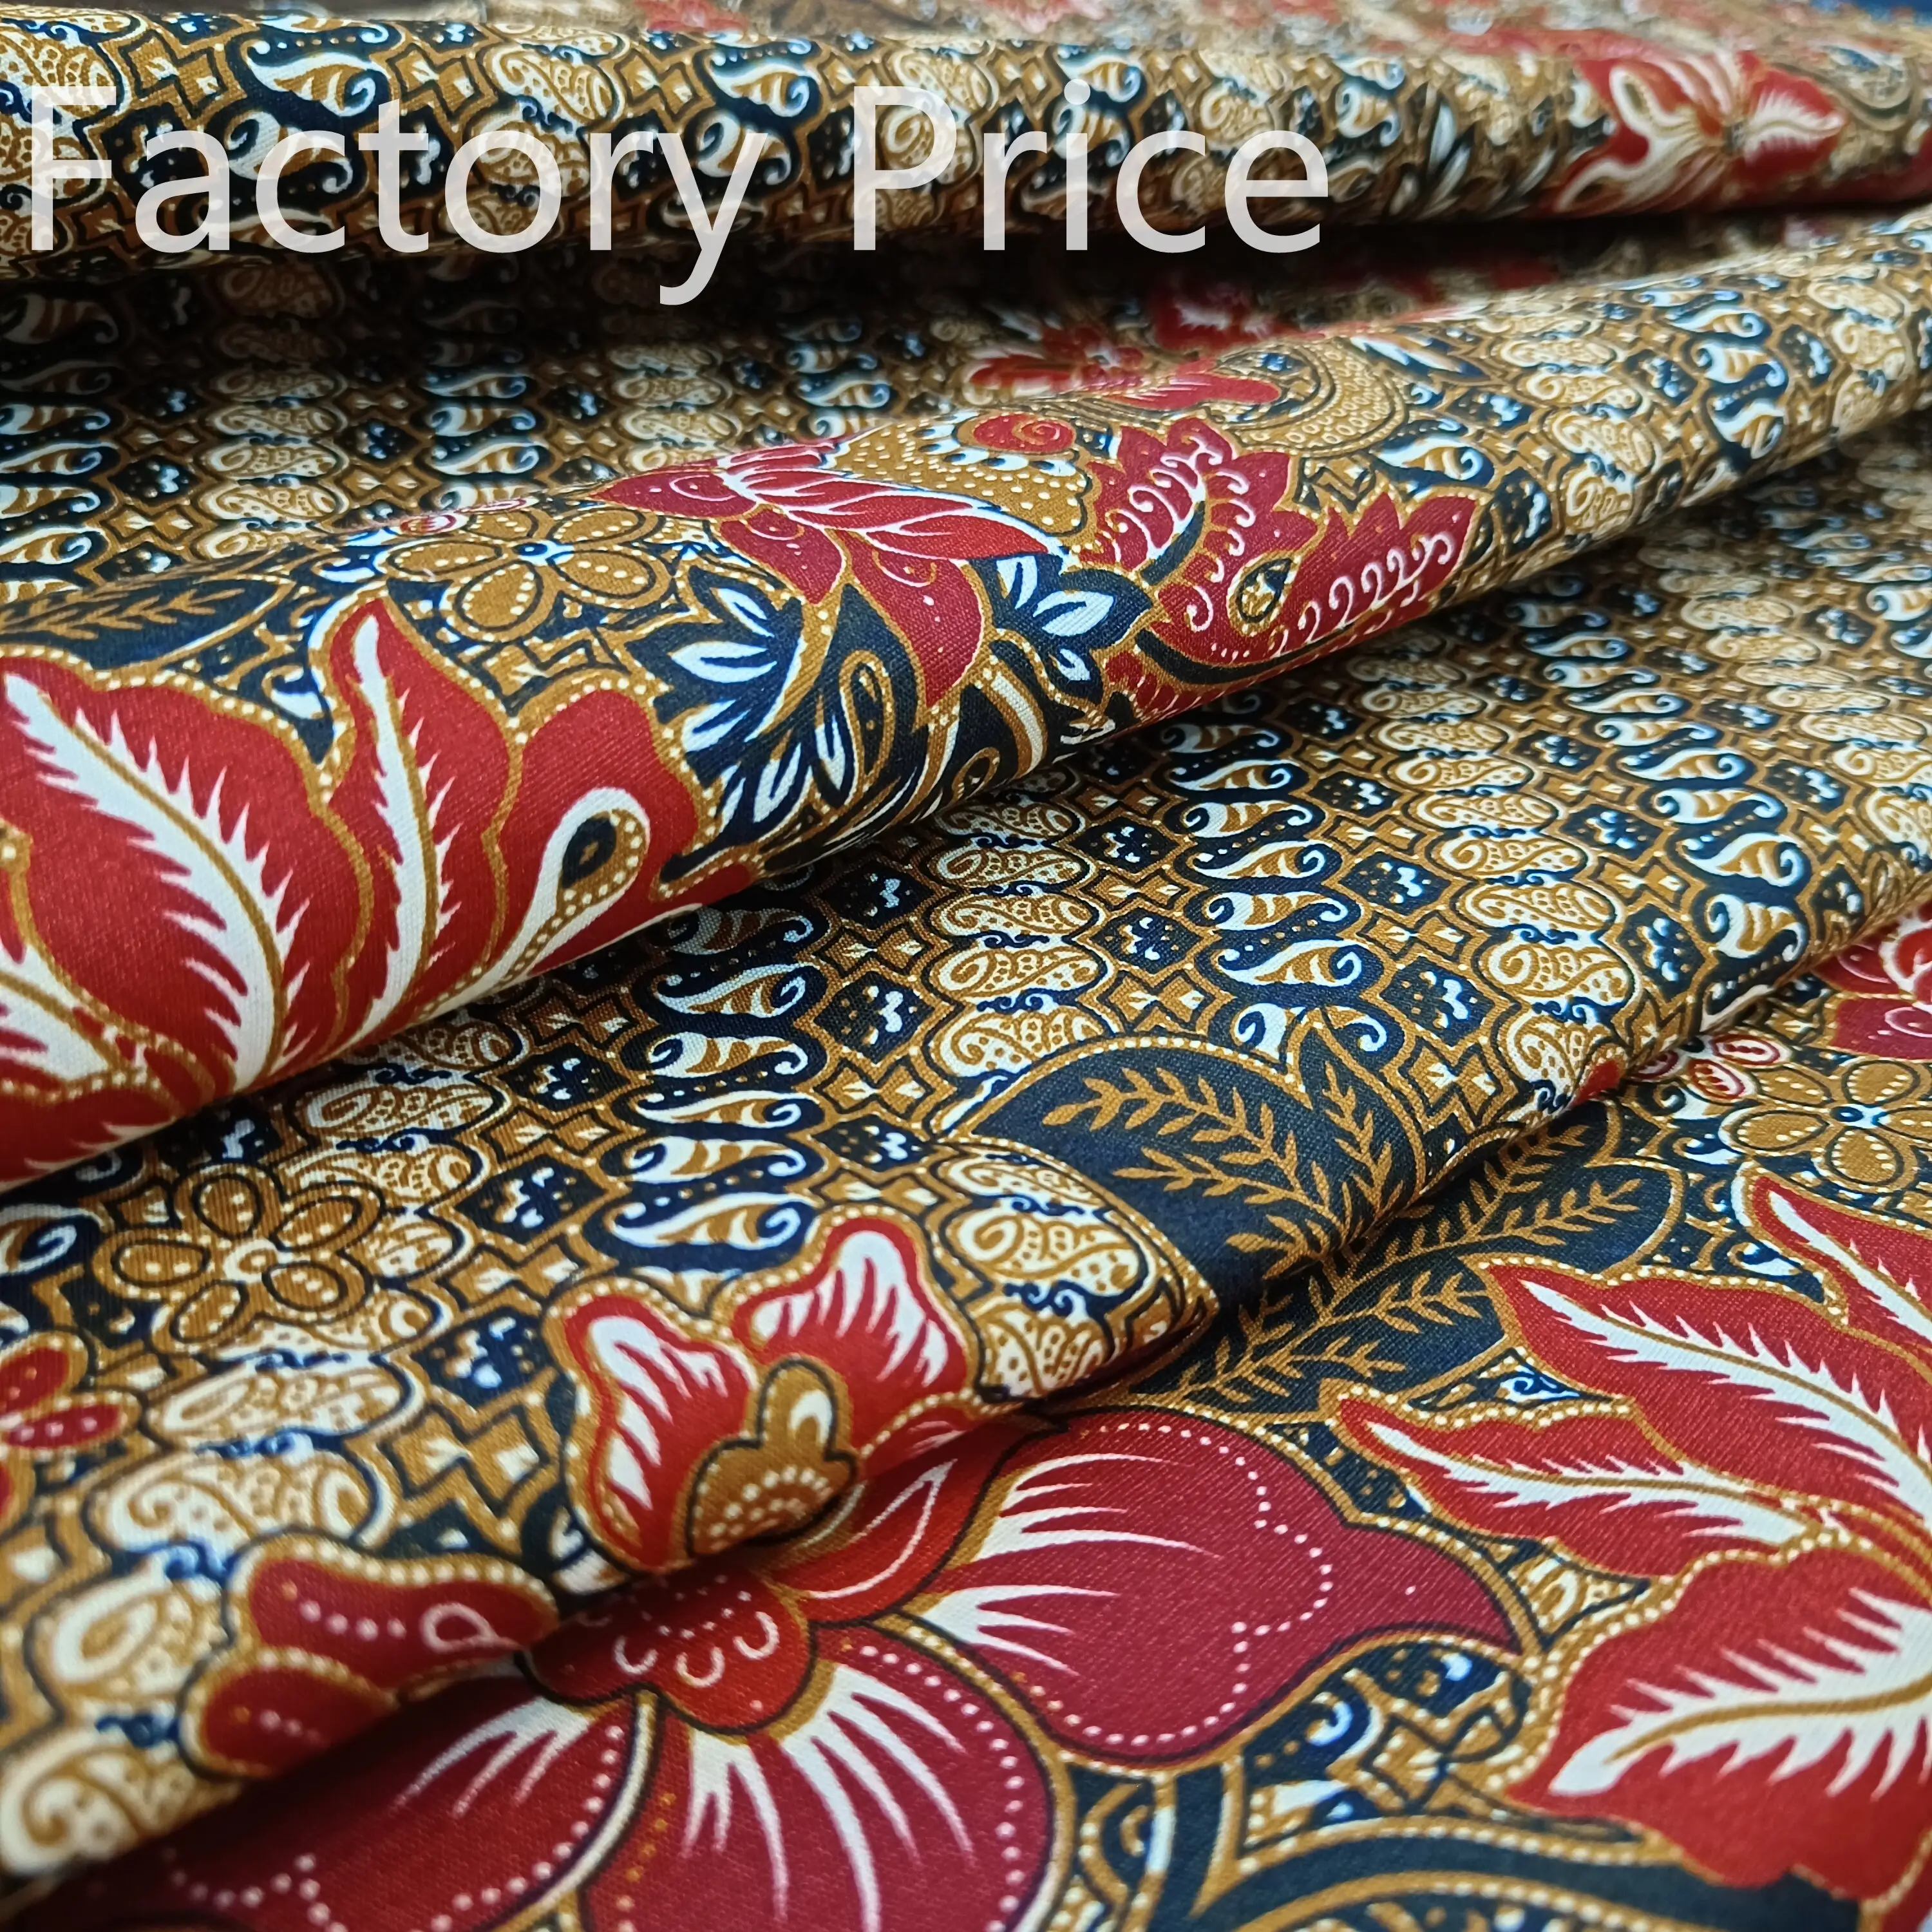 Precio barato de fábrica sarong/tela batik poliéster impreso tradicional batik tela tubo falda sarong